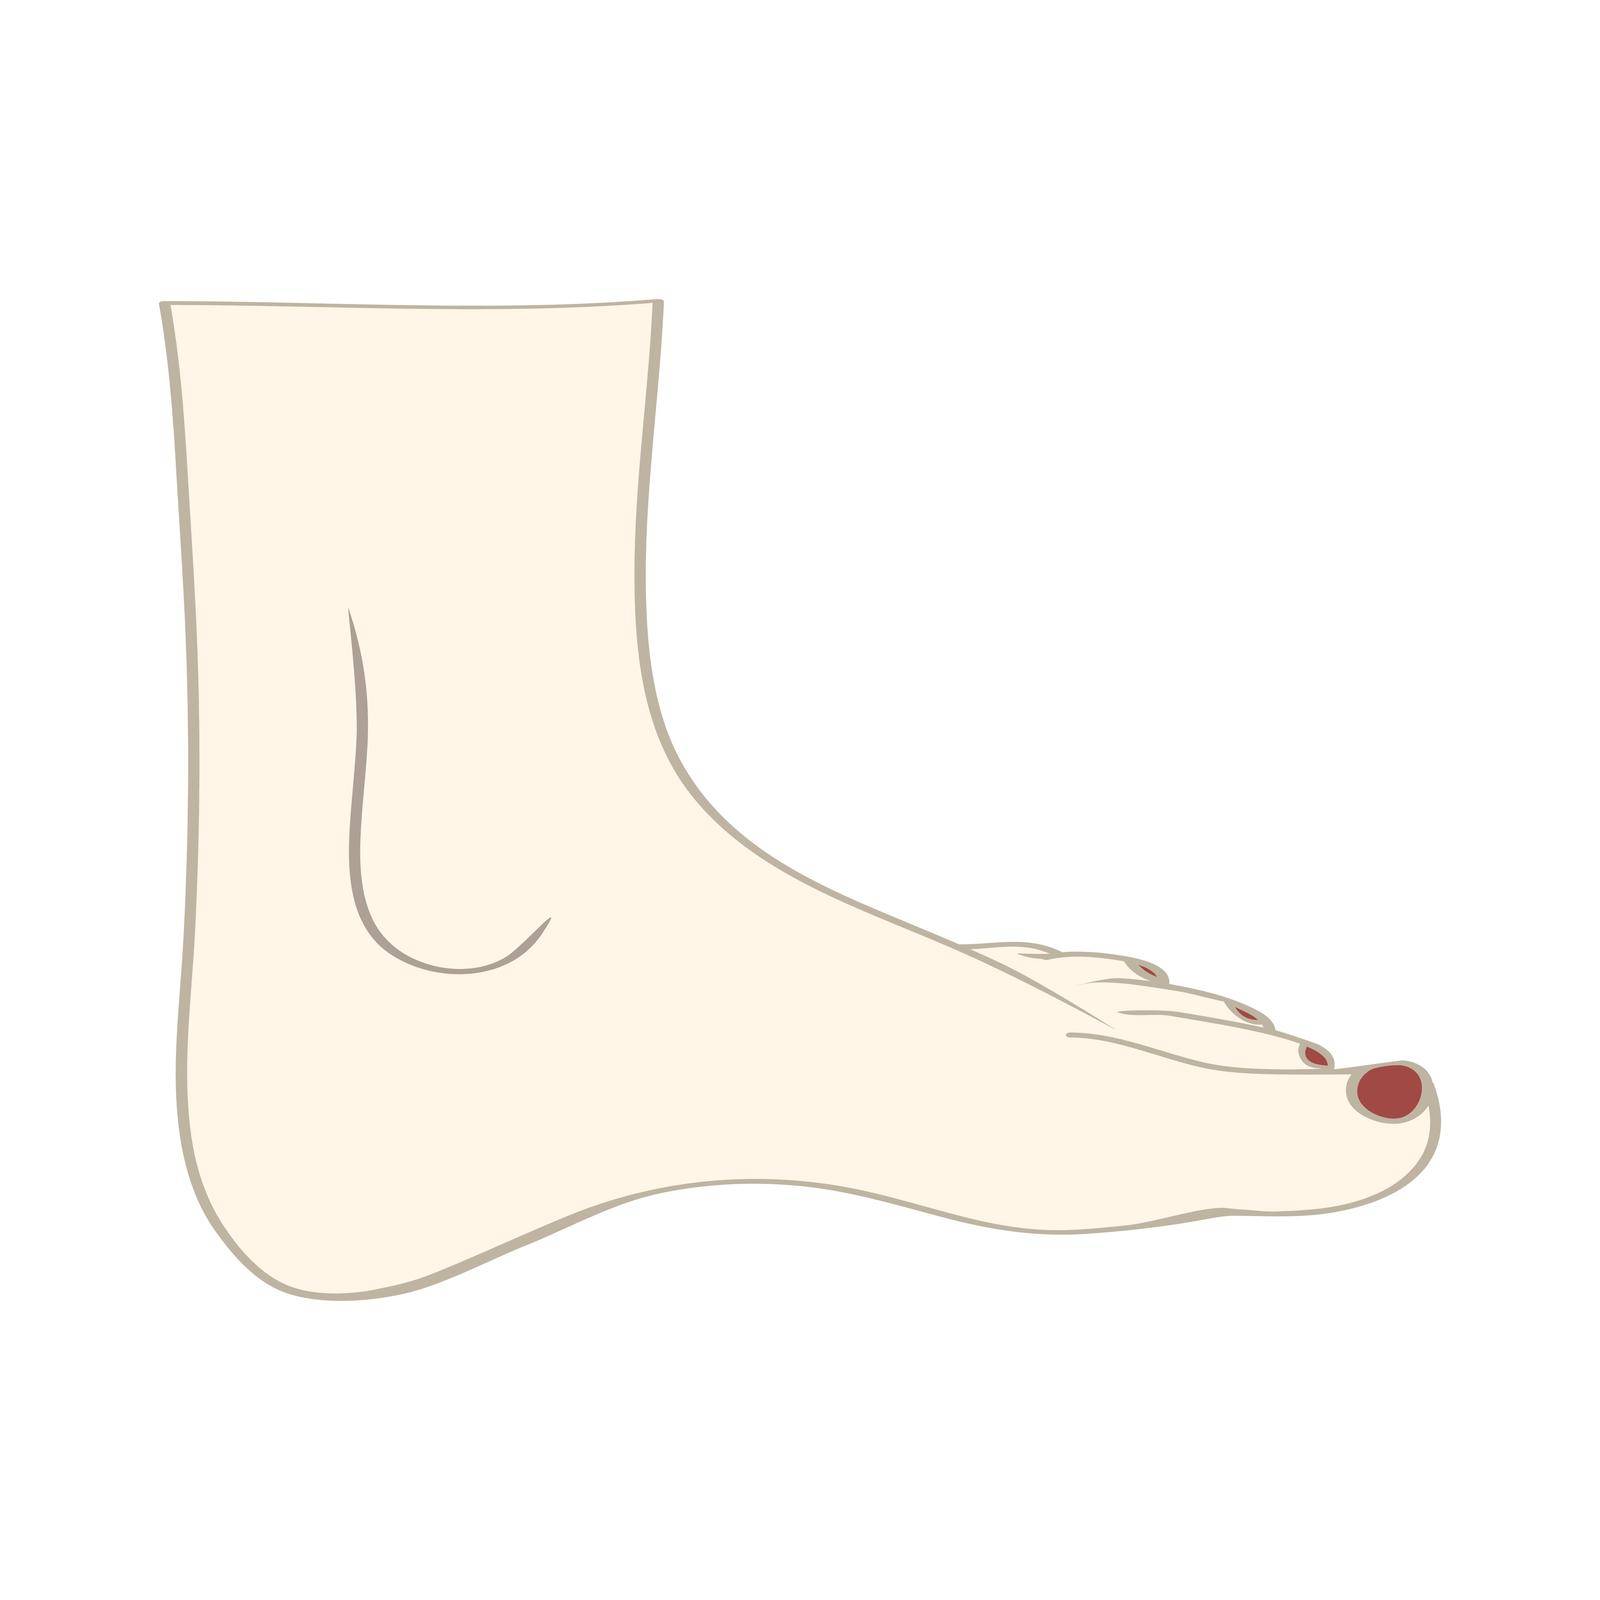 feet in vector by LyannaDesign